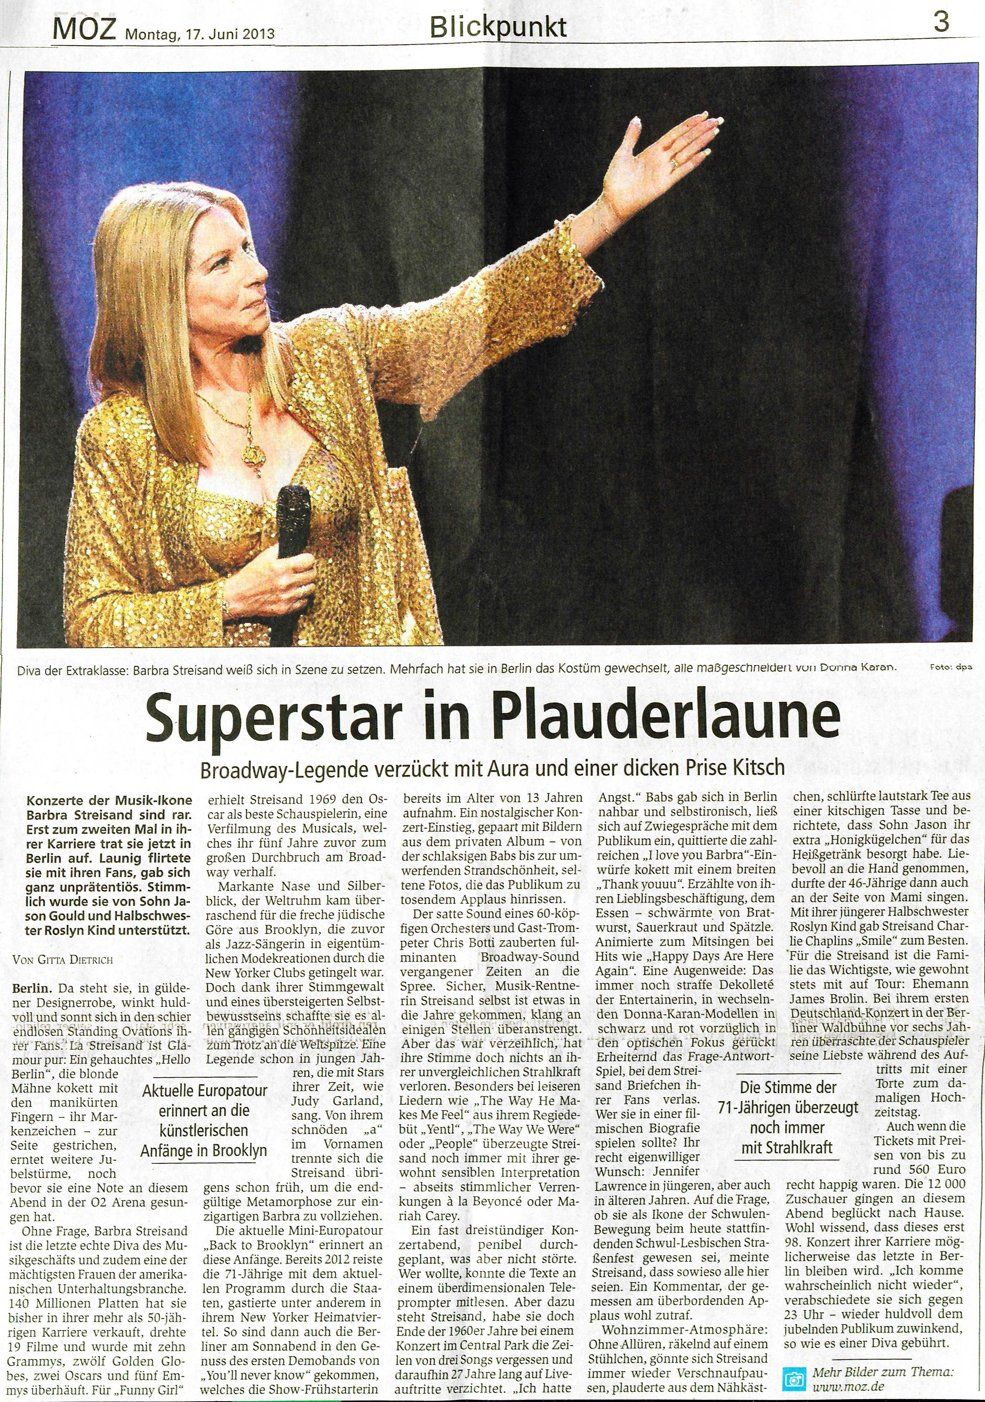 Berlin newspaper review of Barbra Streisand concert, 2013.